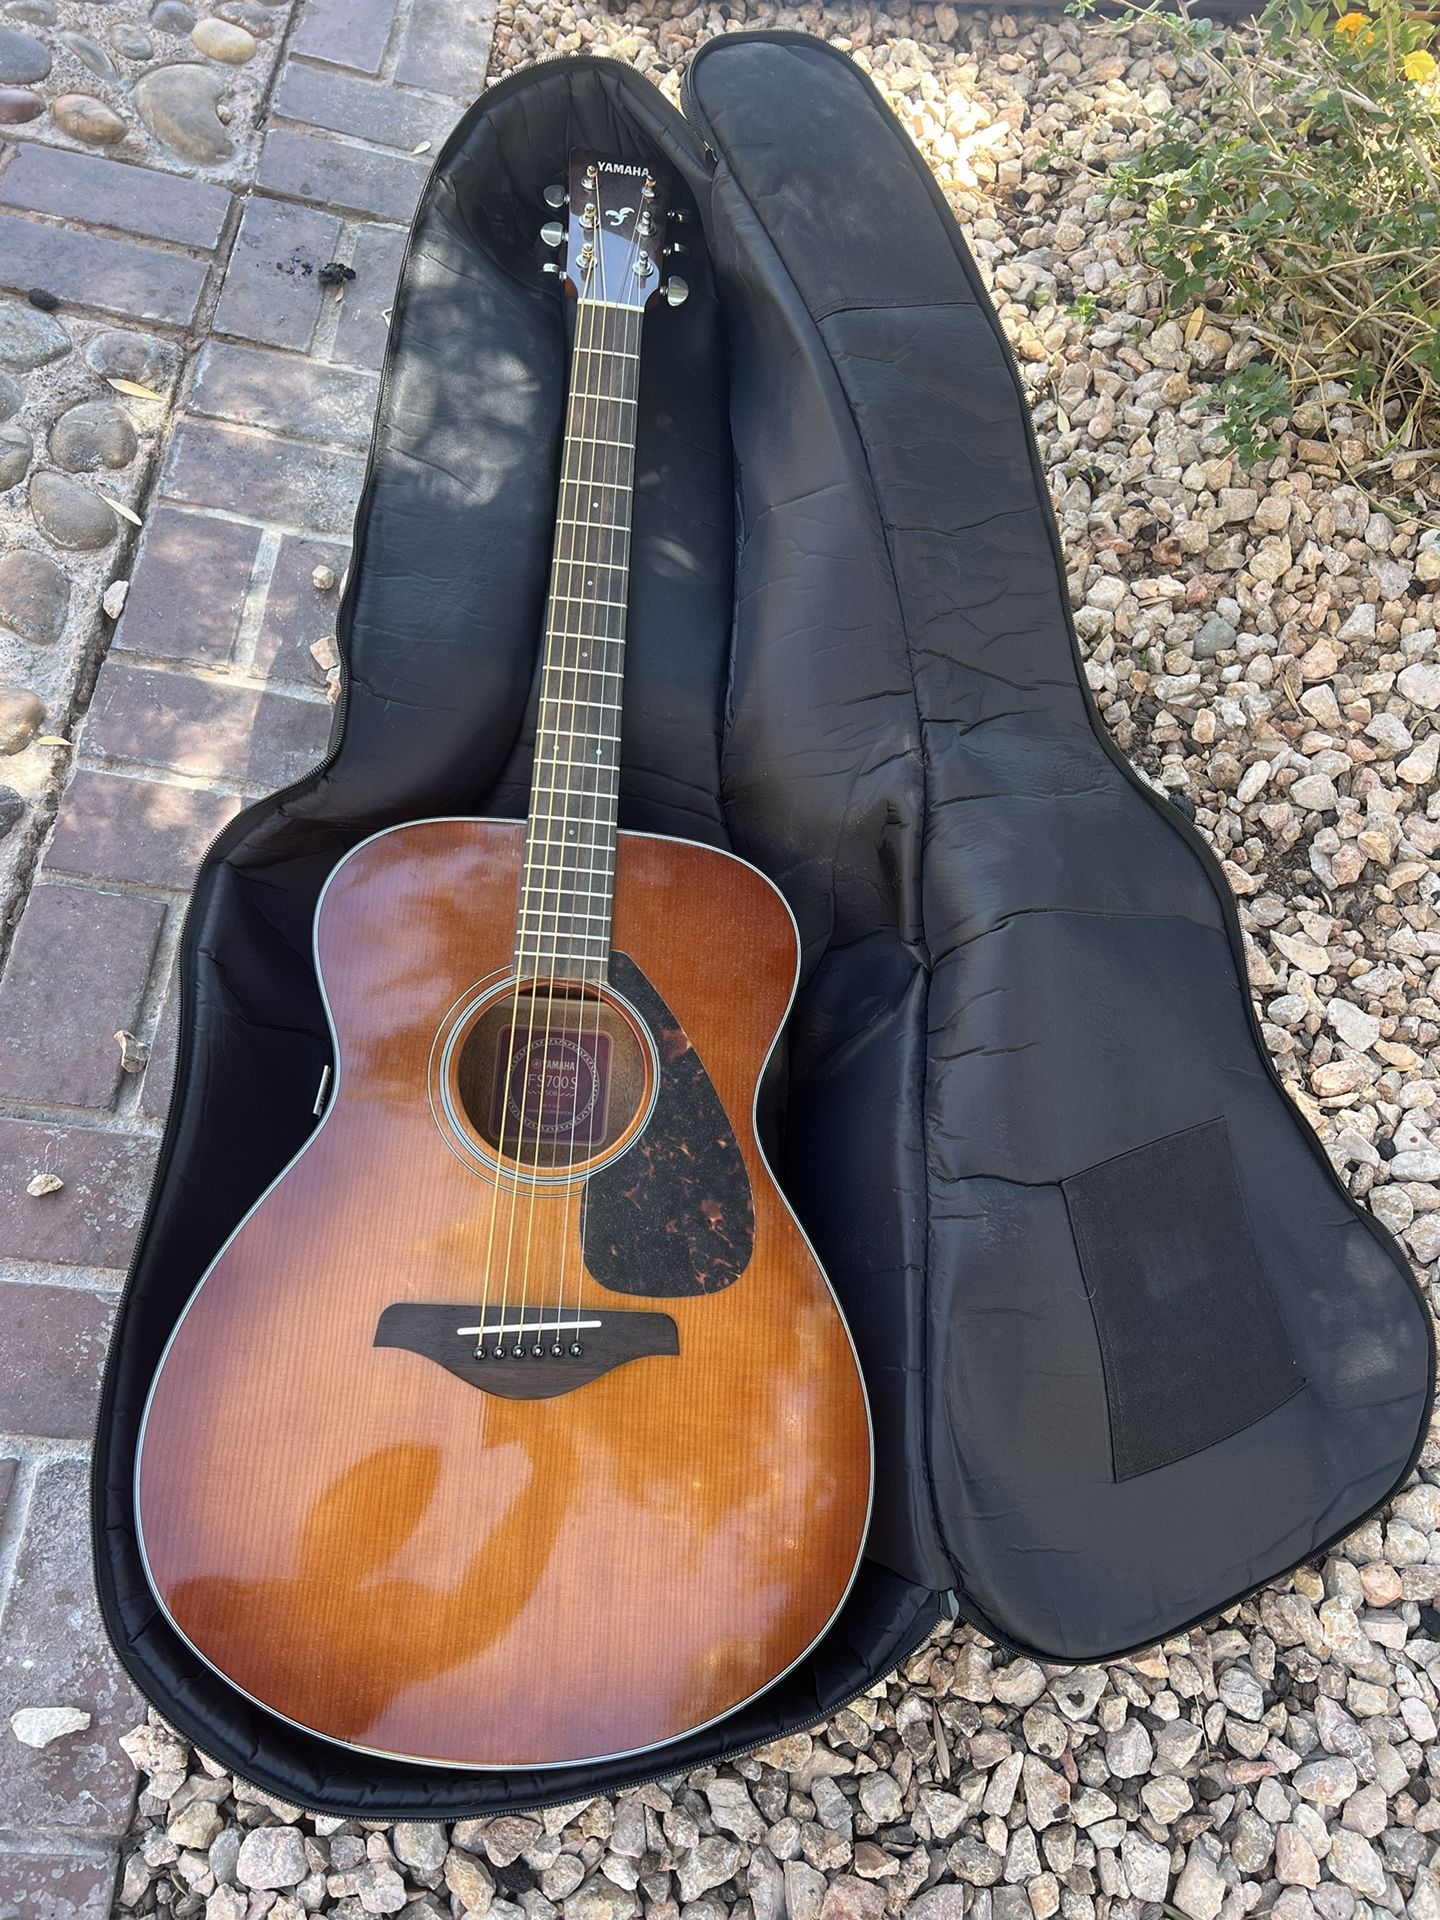 yamaha 700s acoustic guitar